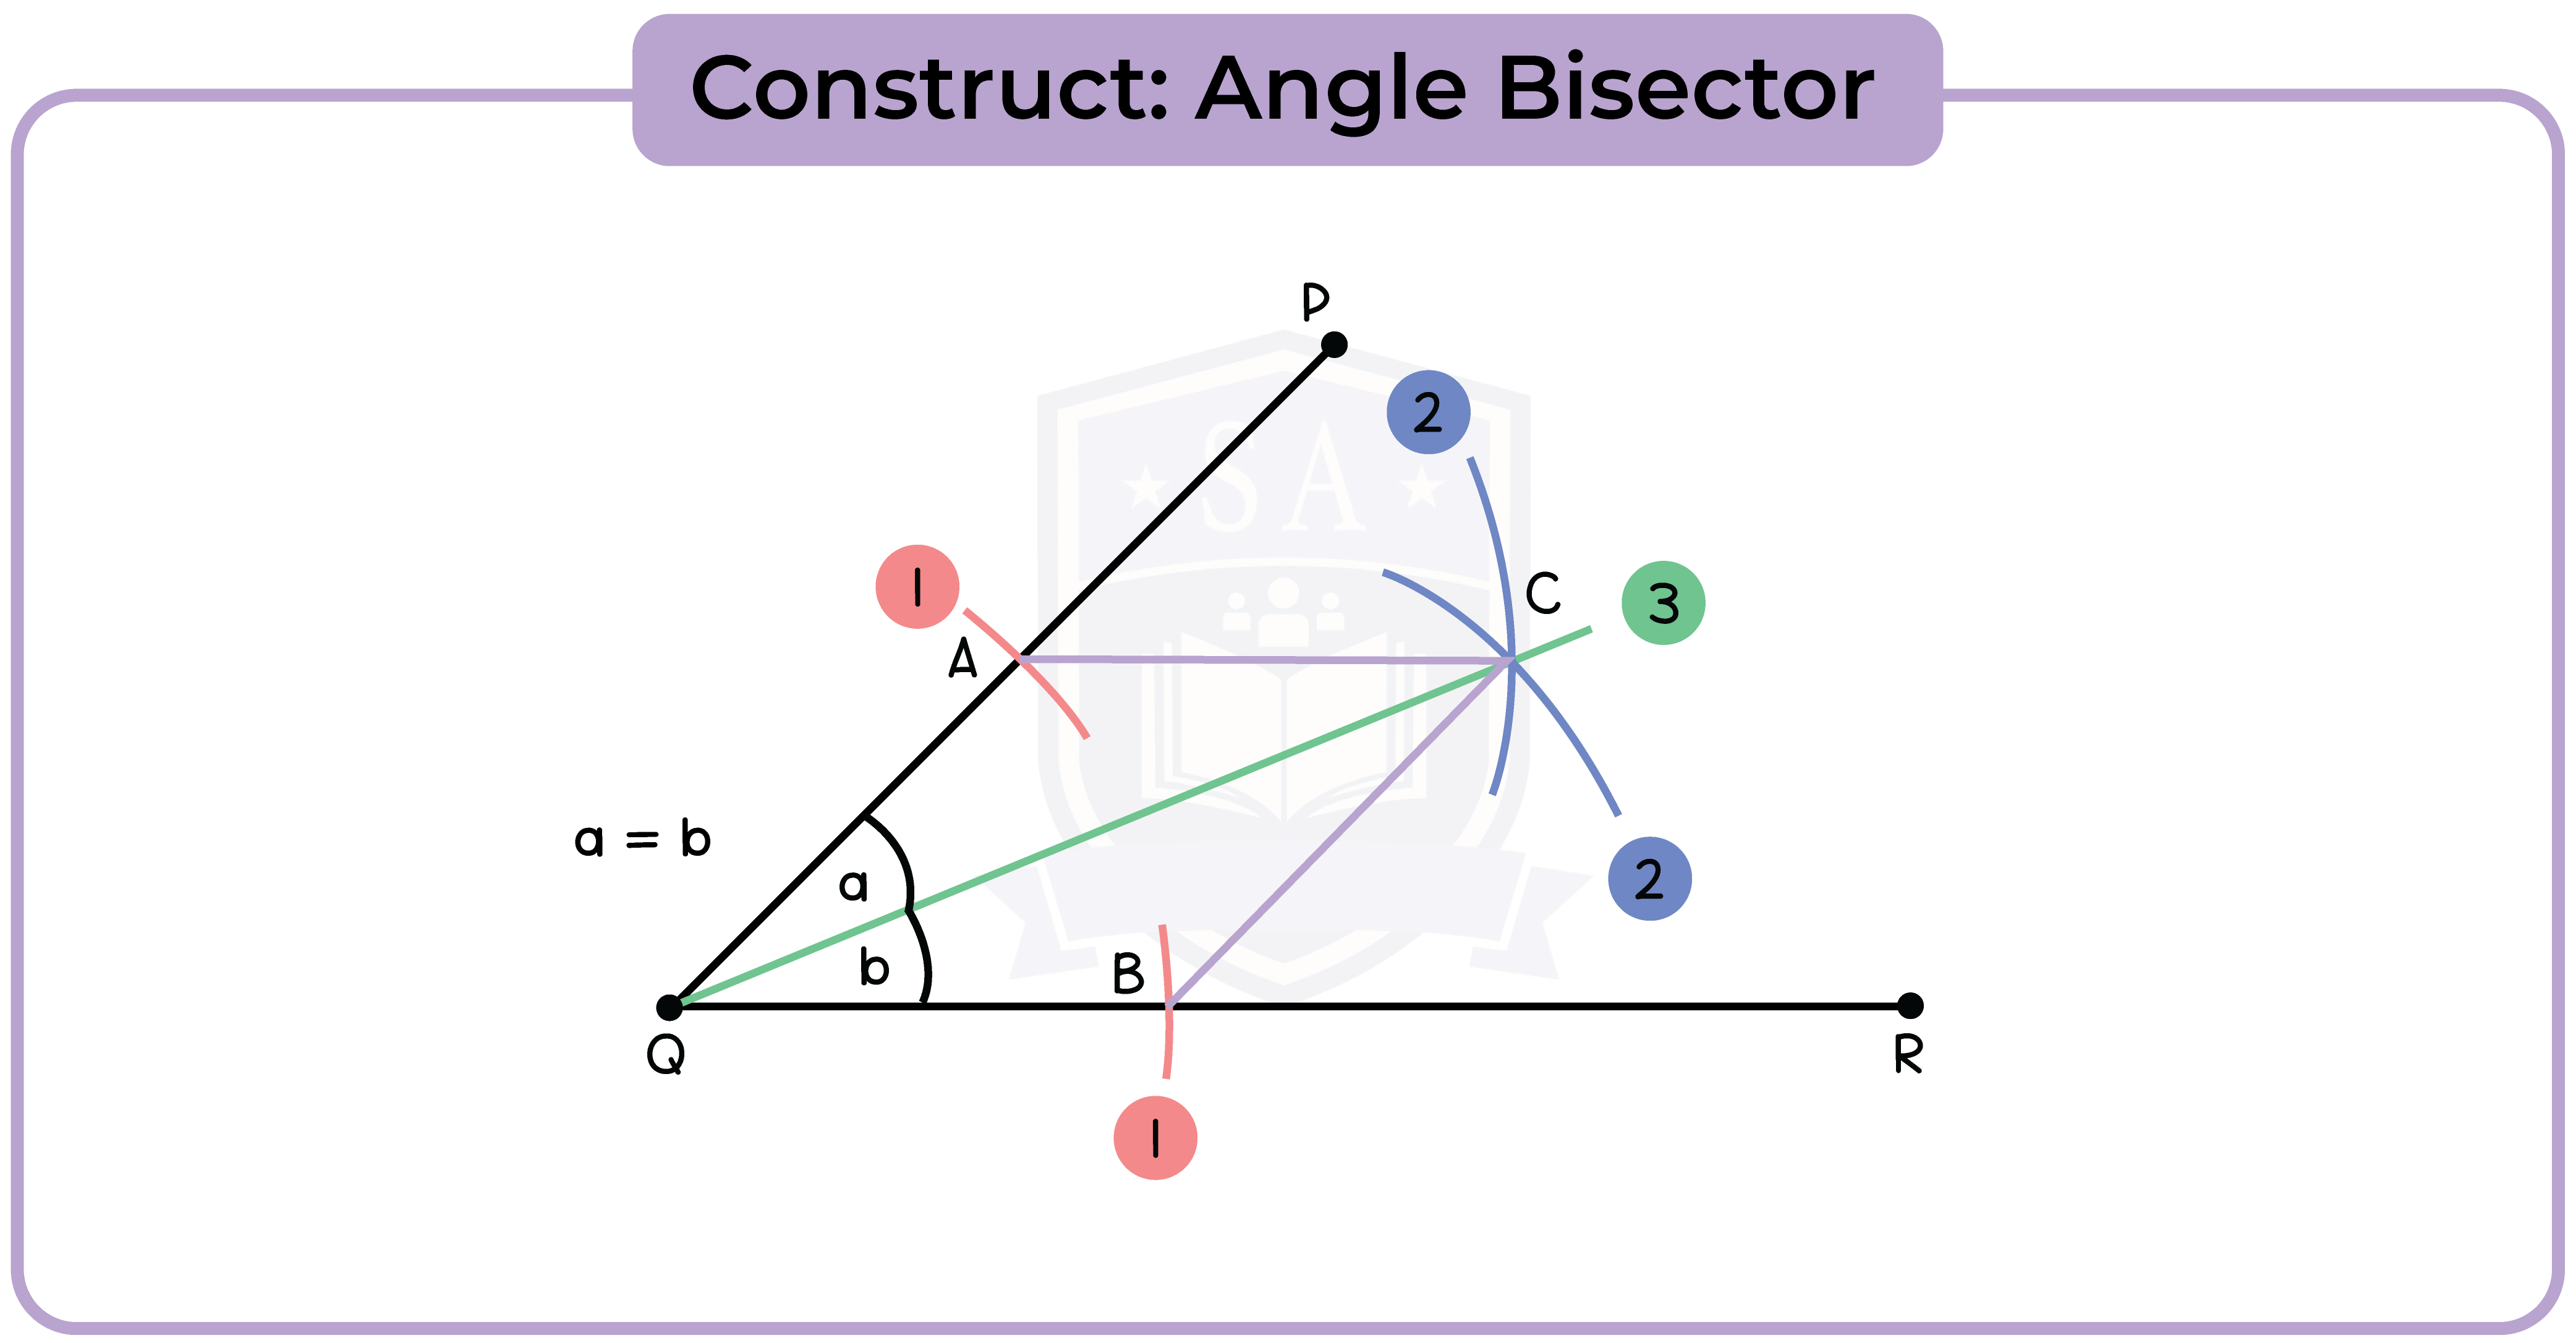 edexcel_igcse_mathematics a_topic 29_construction_003_Construct: Angle Bisector